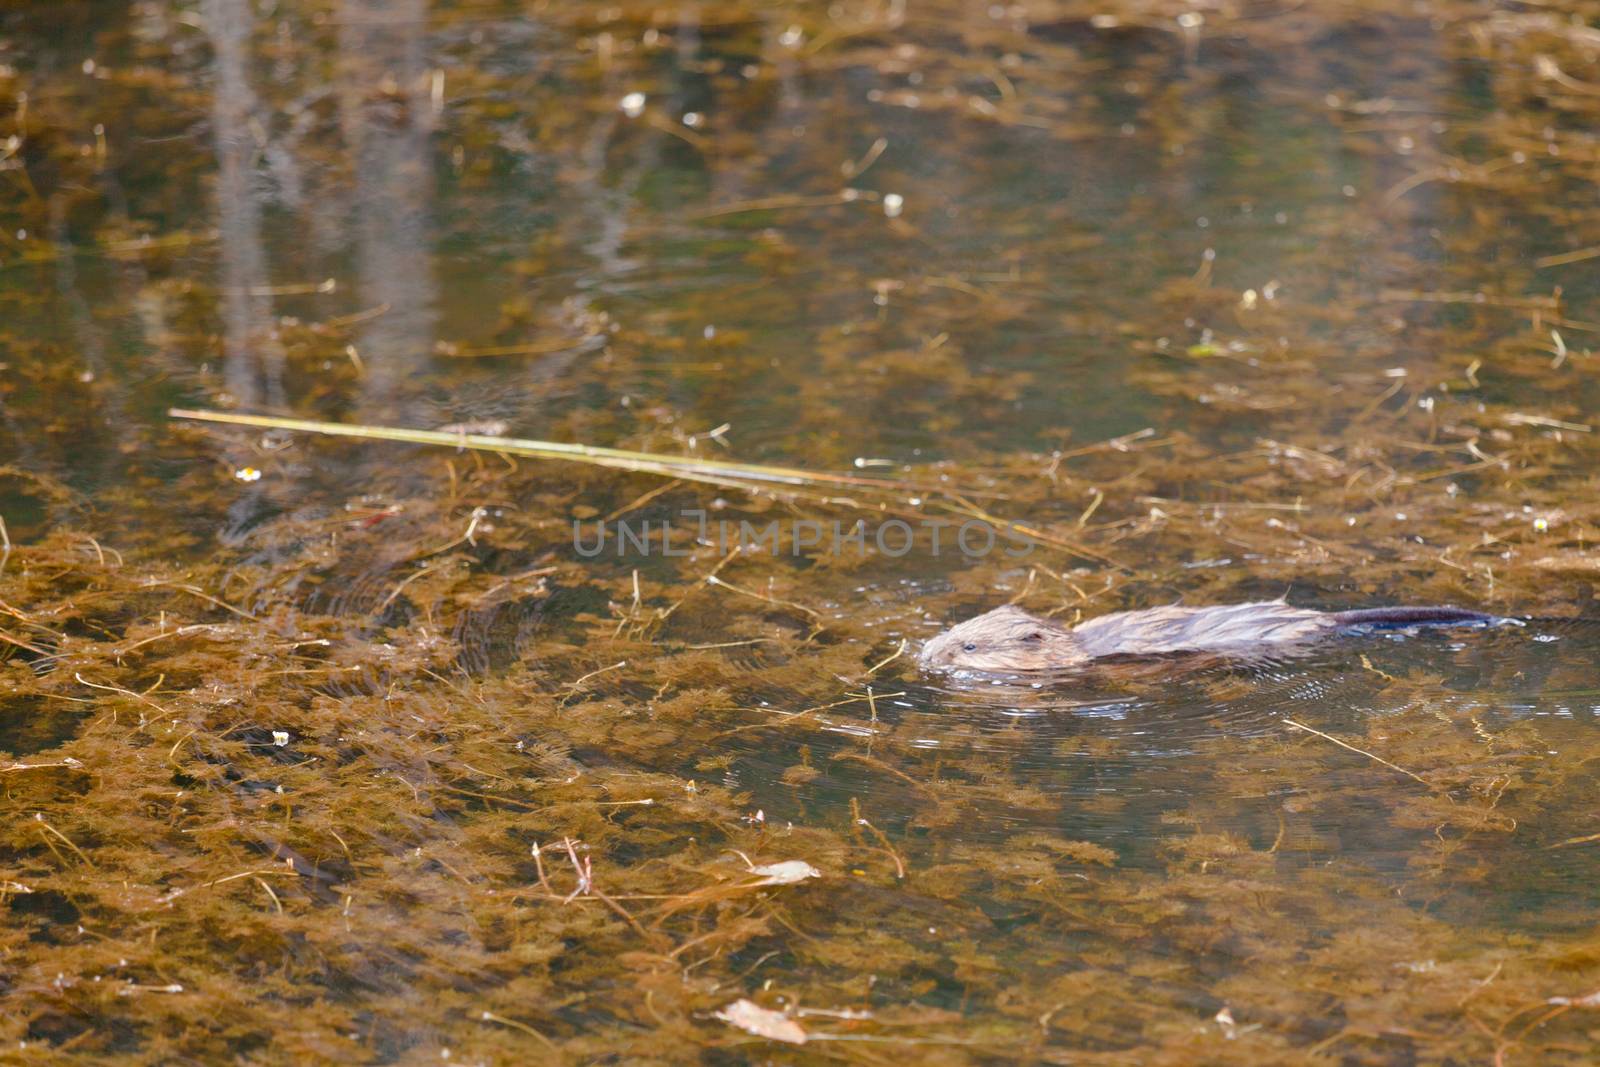 Semiaquatic rodent Muskrat, Ondatra zibethicus, swimming on surface of swampy pond in wetland habitat